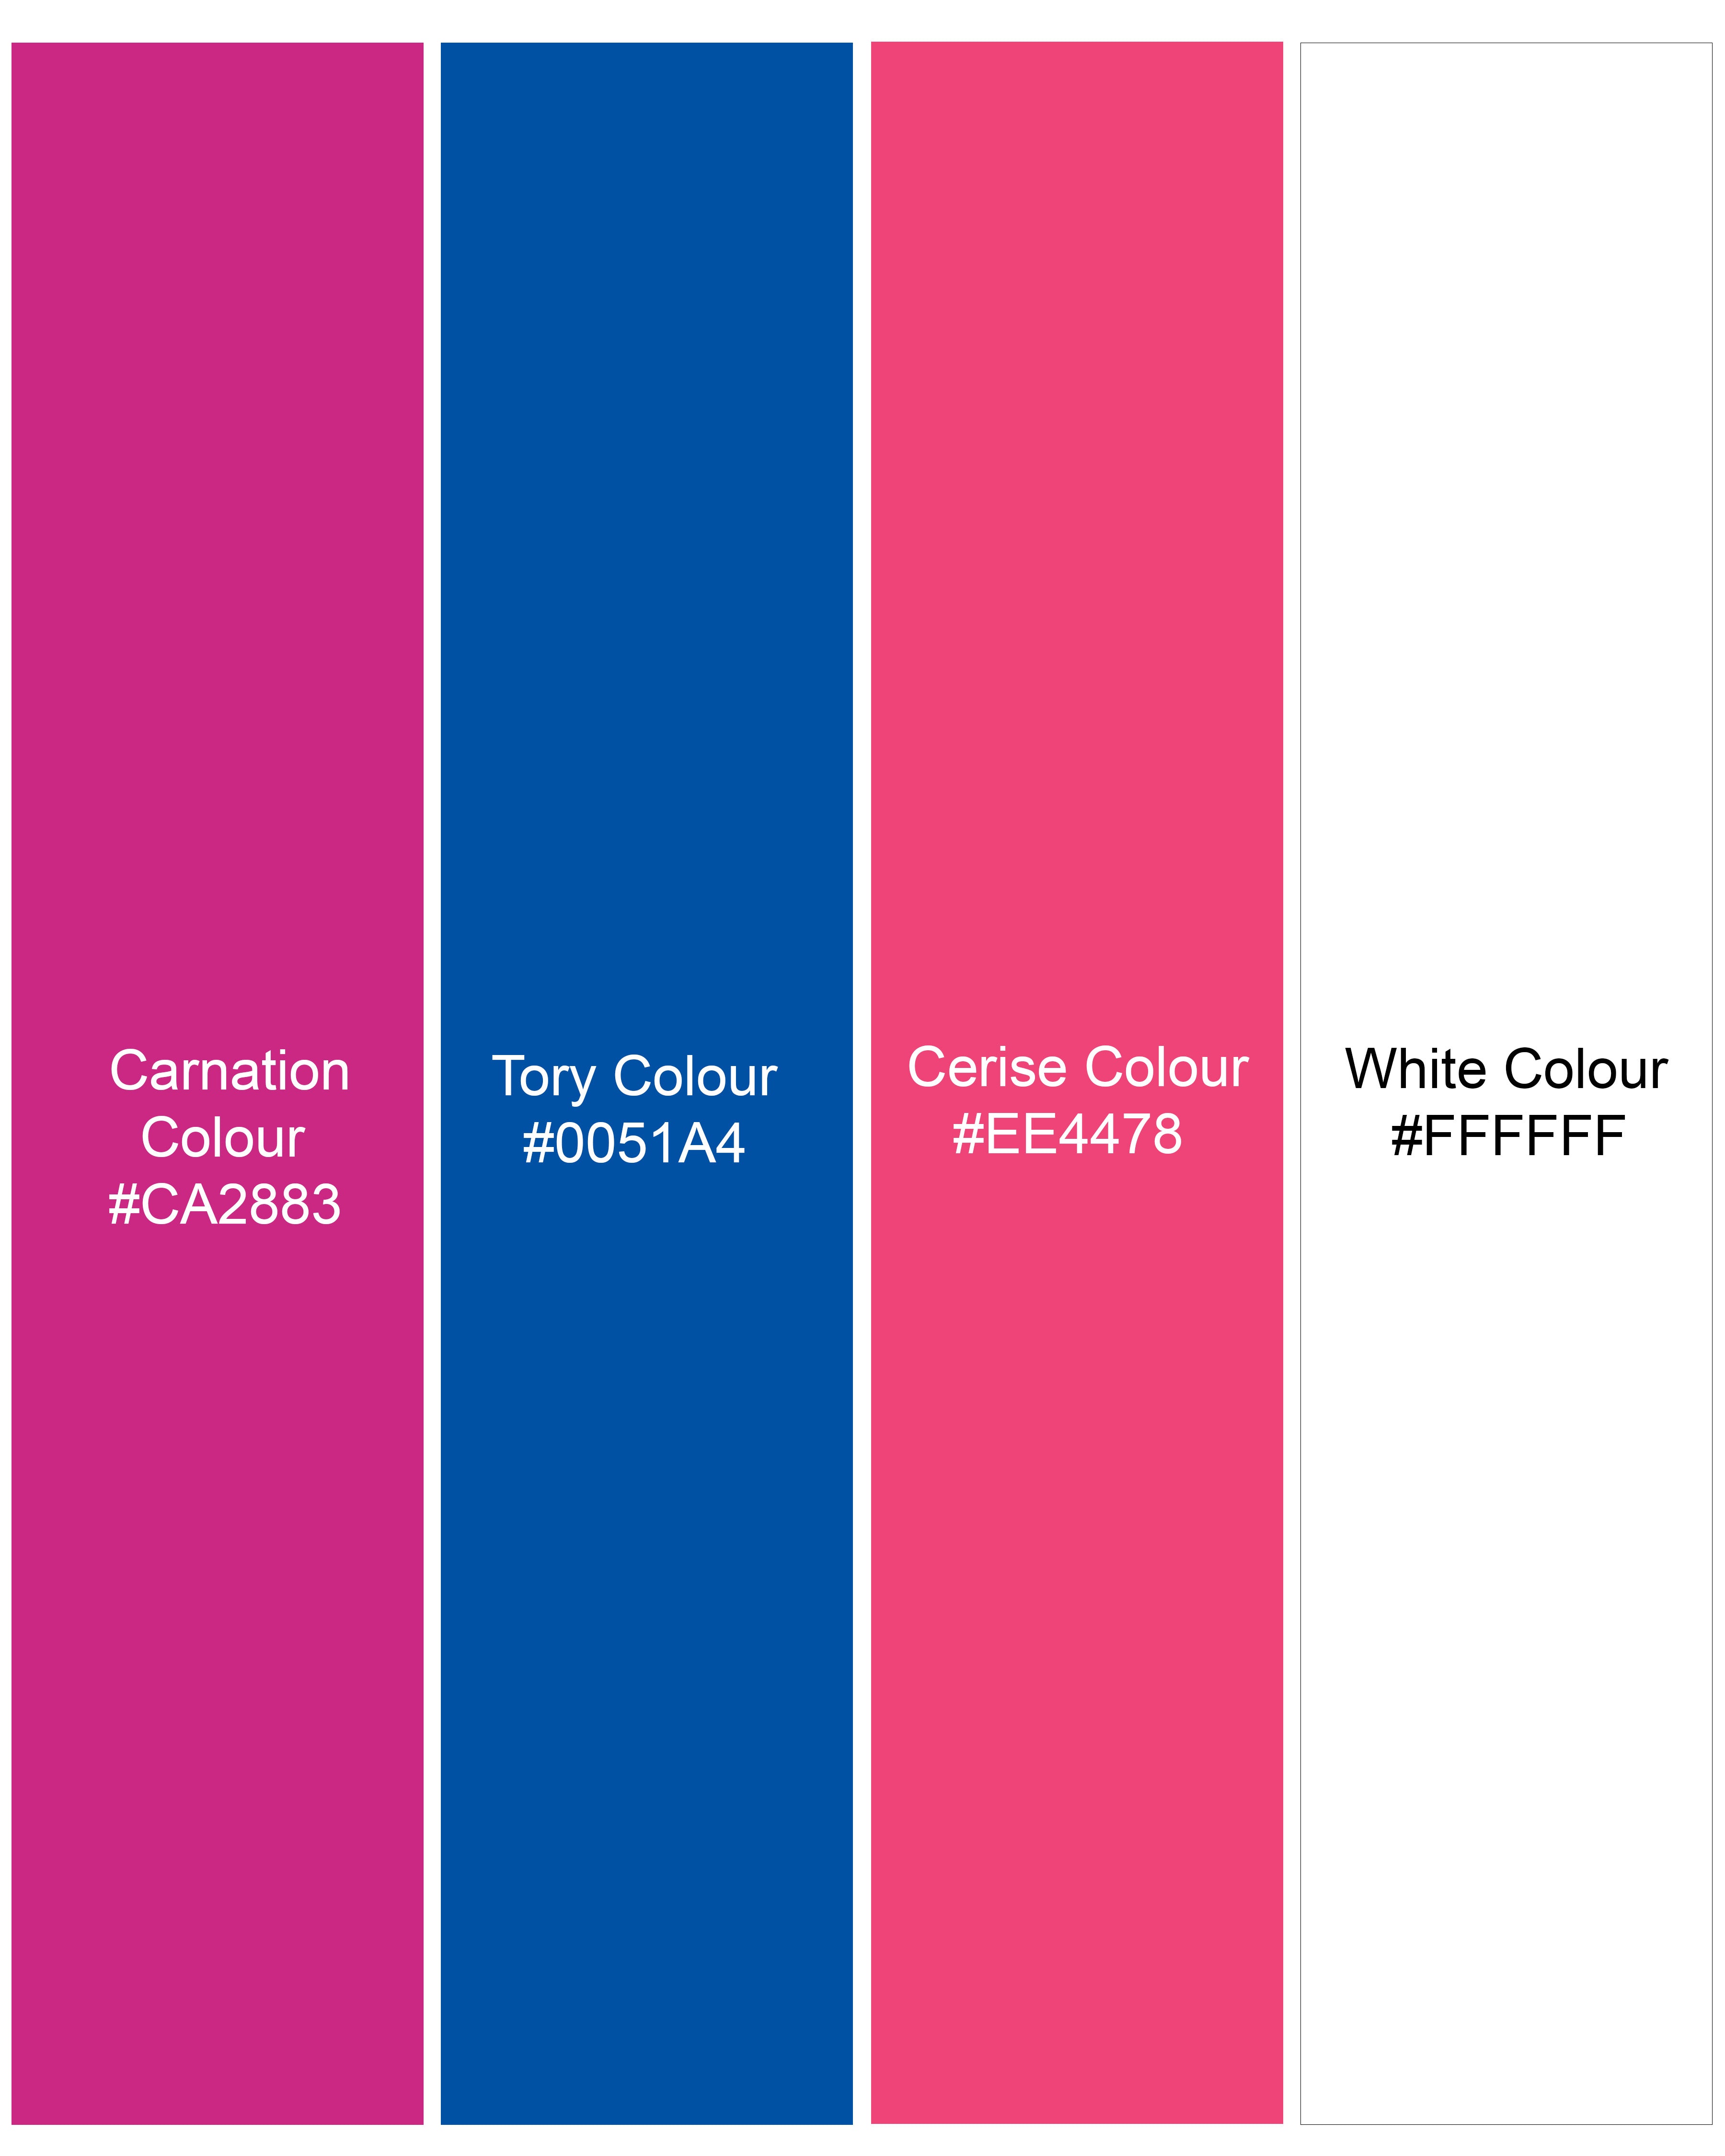 Carnation Pink with Tory Blue Plaid Herringbone Shirt 9188-38, 9188-H-38, 9188-39, 9188-H-39, 9188-40, 9188-H-40, 9188-42, 9188-H-42, 9188-44, 9188-H-44, 9188-46, 9188-H-46, 9188-48, 9188-H-48, 9188-50, 9188-H-50, 9188-52, 9188-H-52